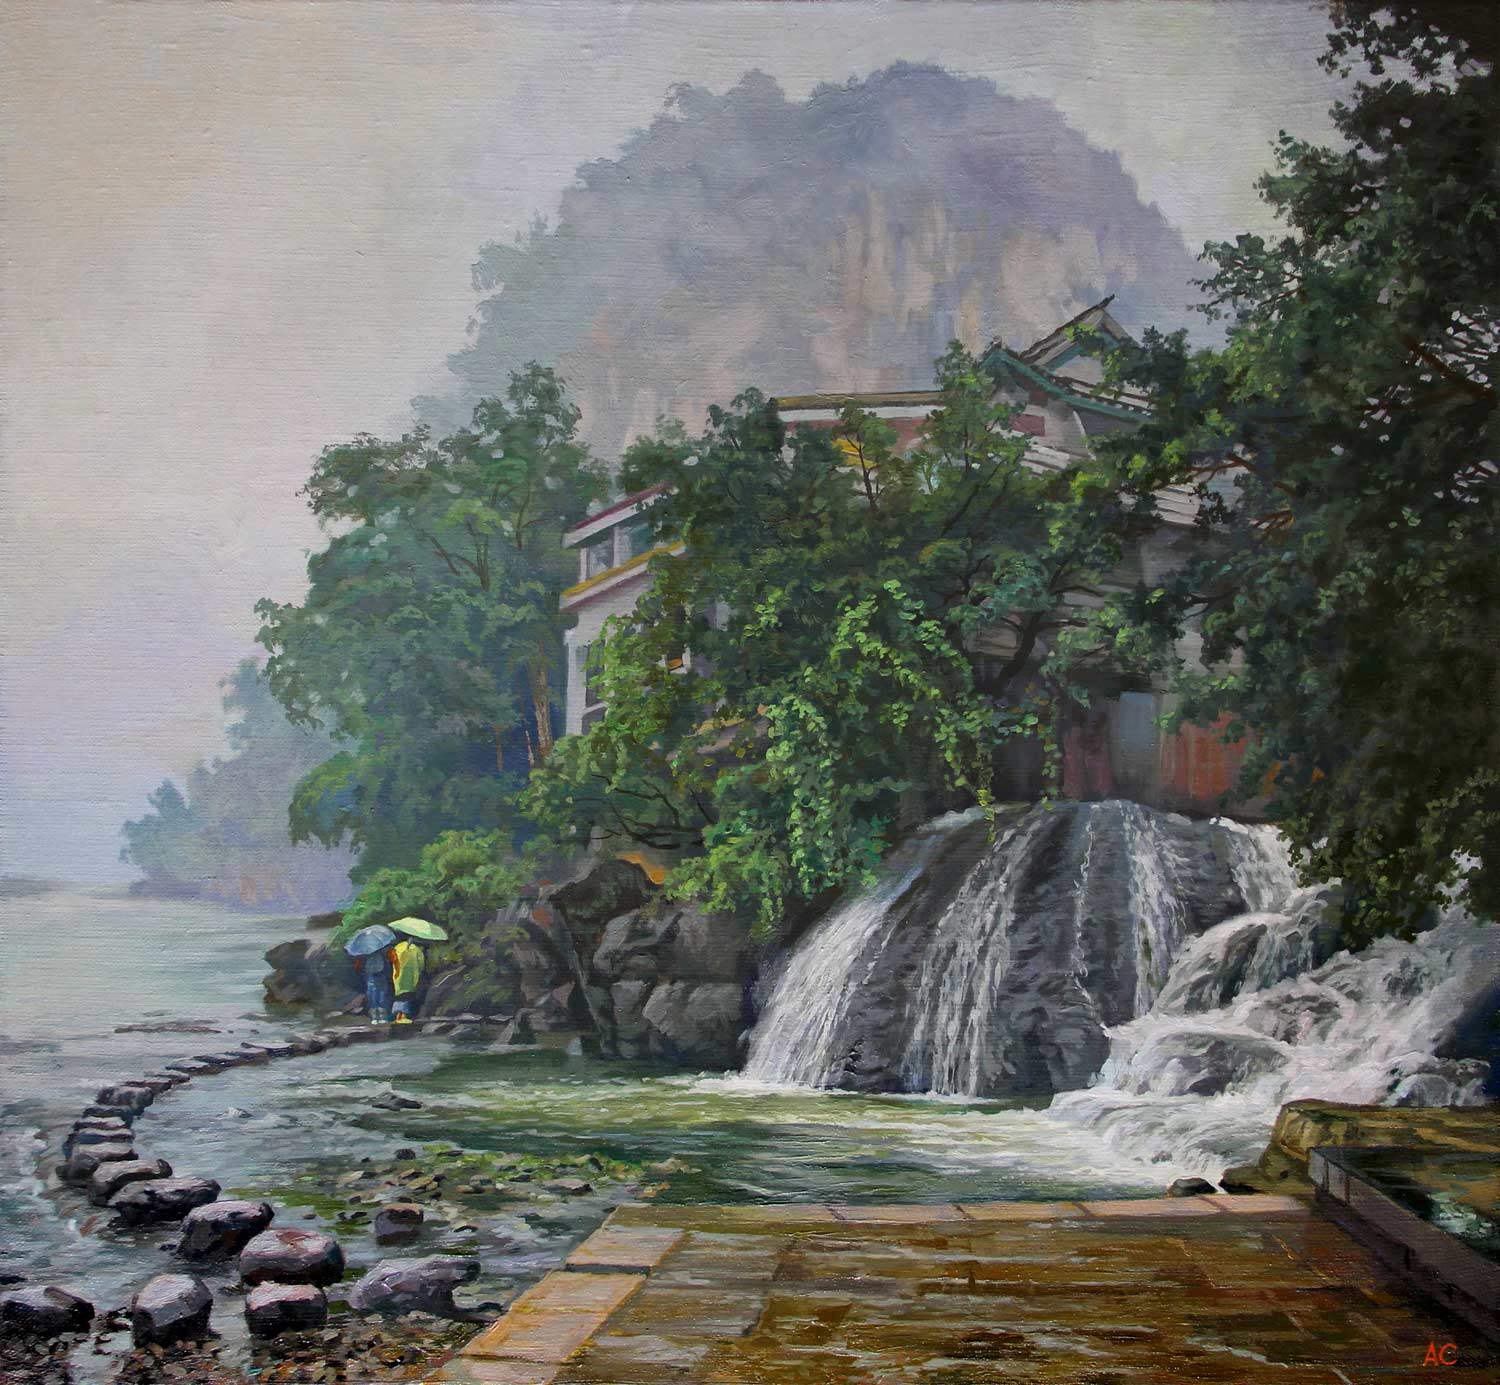 It's Drizzling in Yangshuo - 1, Alexander Samokhvalov, Buy the painting Oil